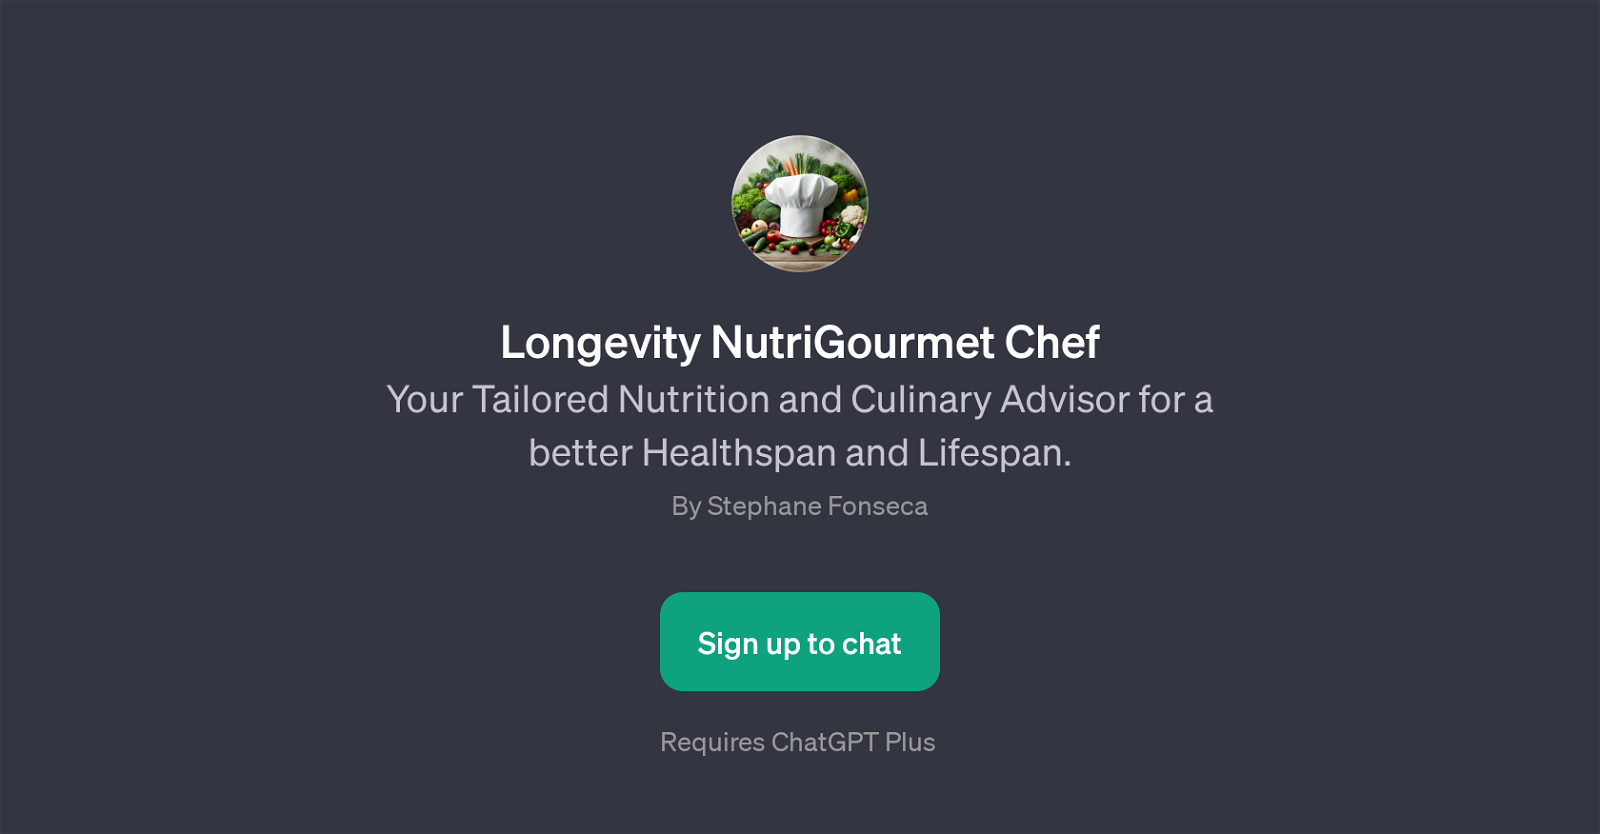 Longevity NutriGourmet Chef website